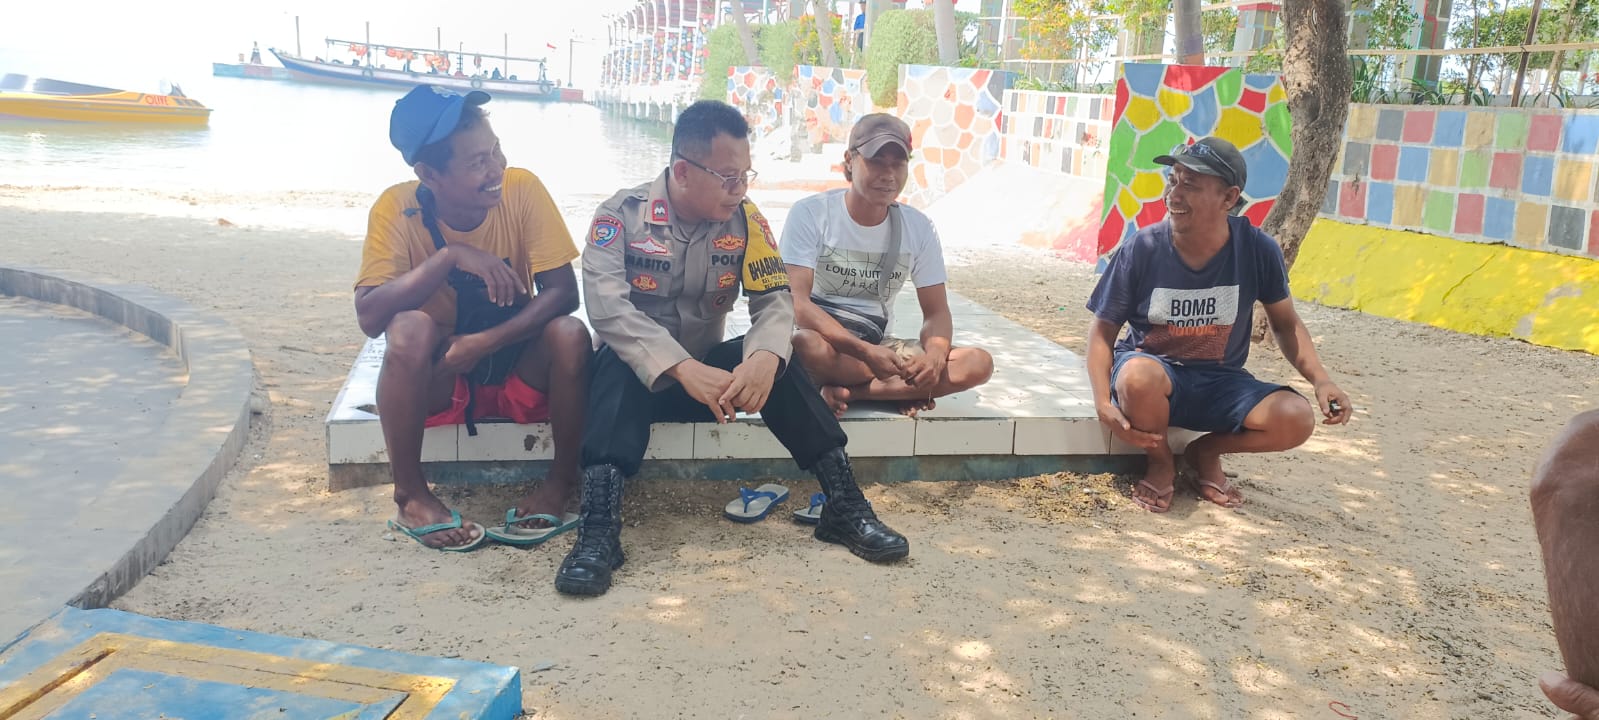 Bhabinkamtibmas Pulau Untung Jawa Sambangi Warga: Sinergi untuk Keamanan dan Ketertiban Wilayah